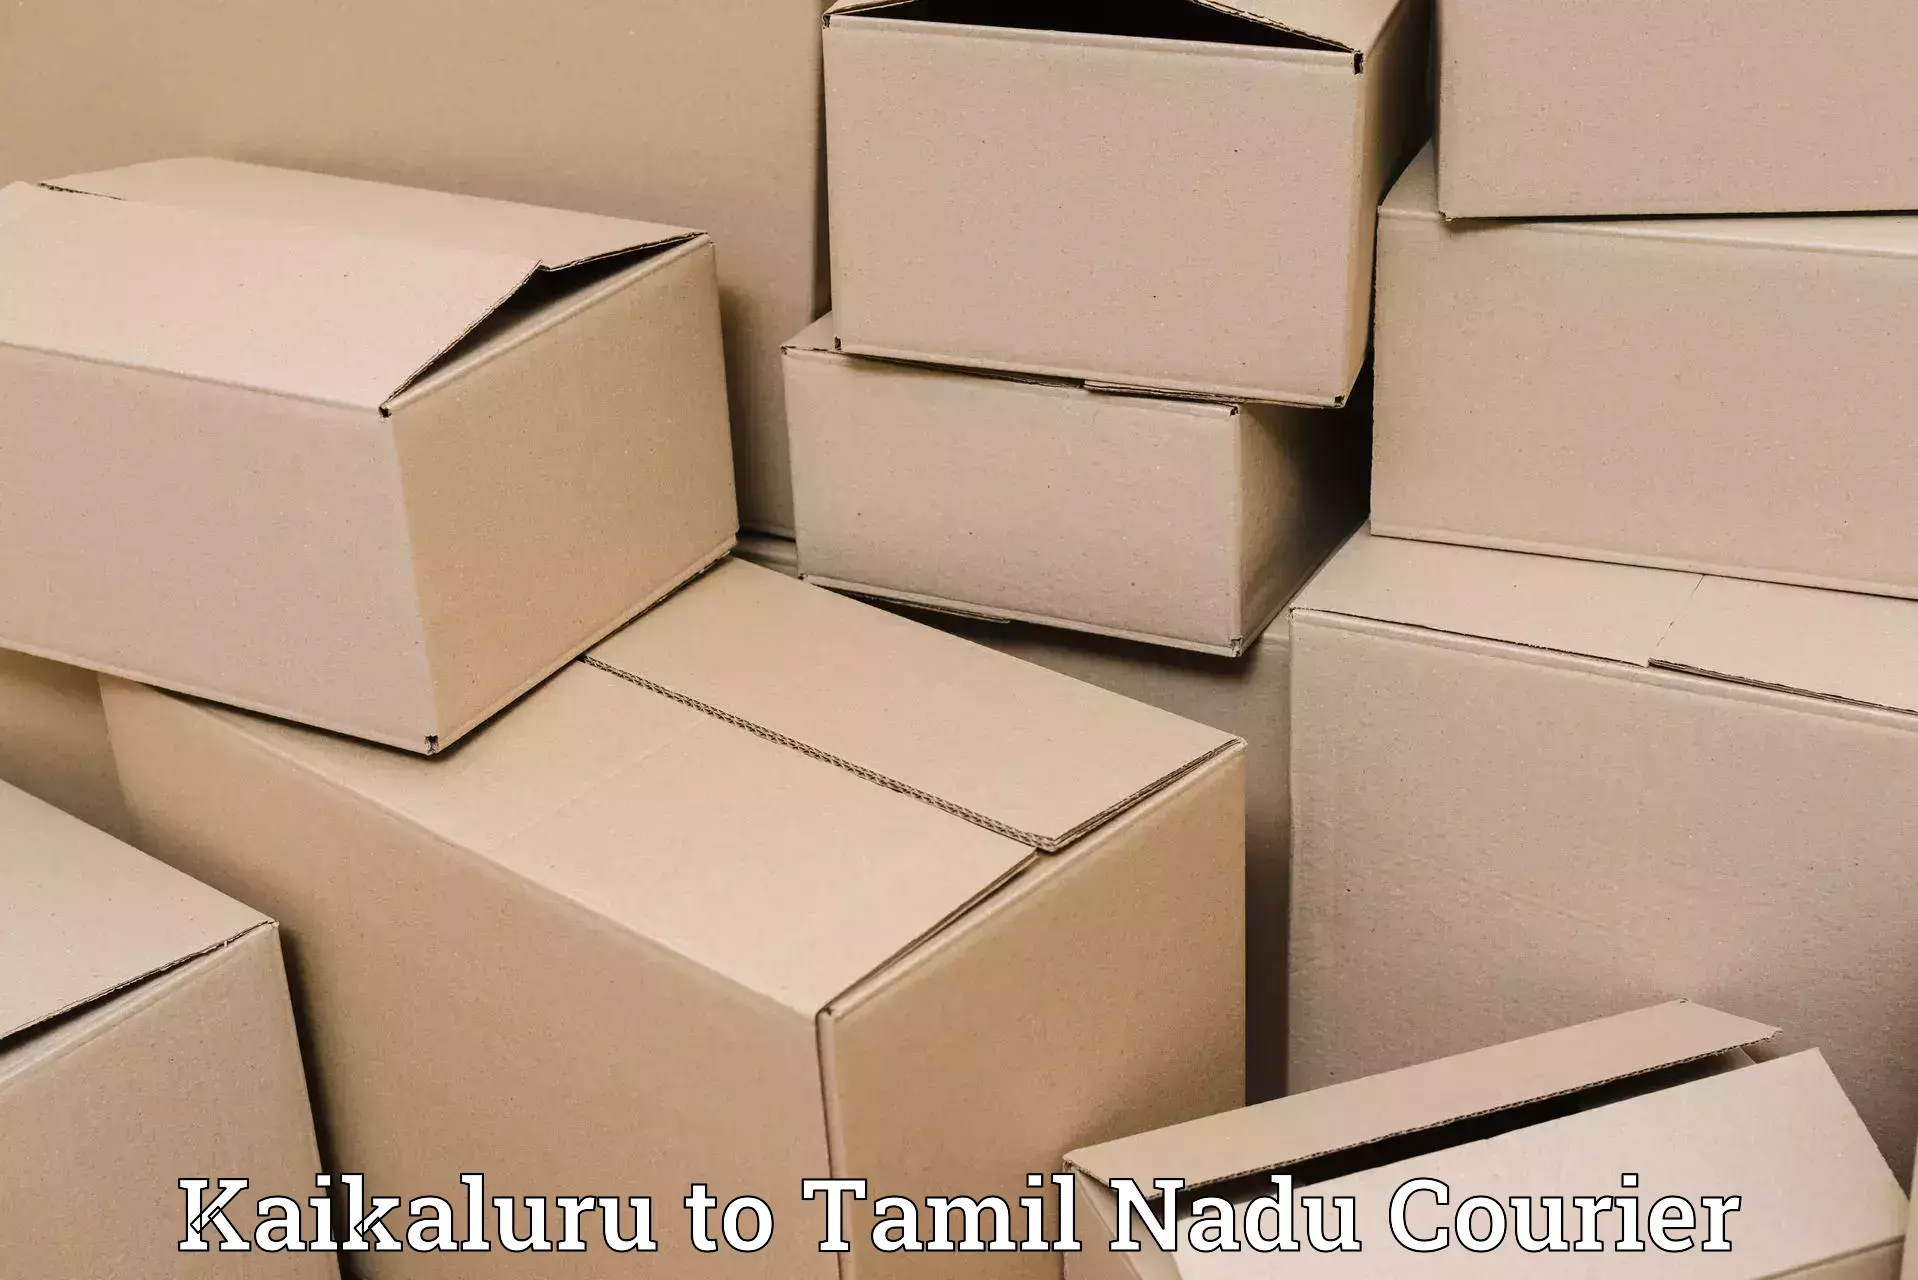 24-hour delivery options Kaikaluru to Erode